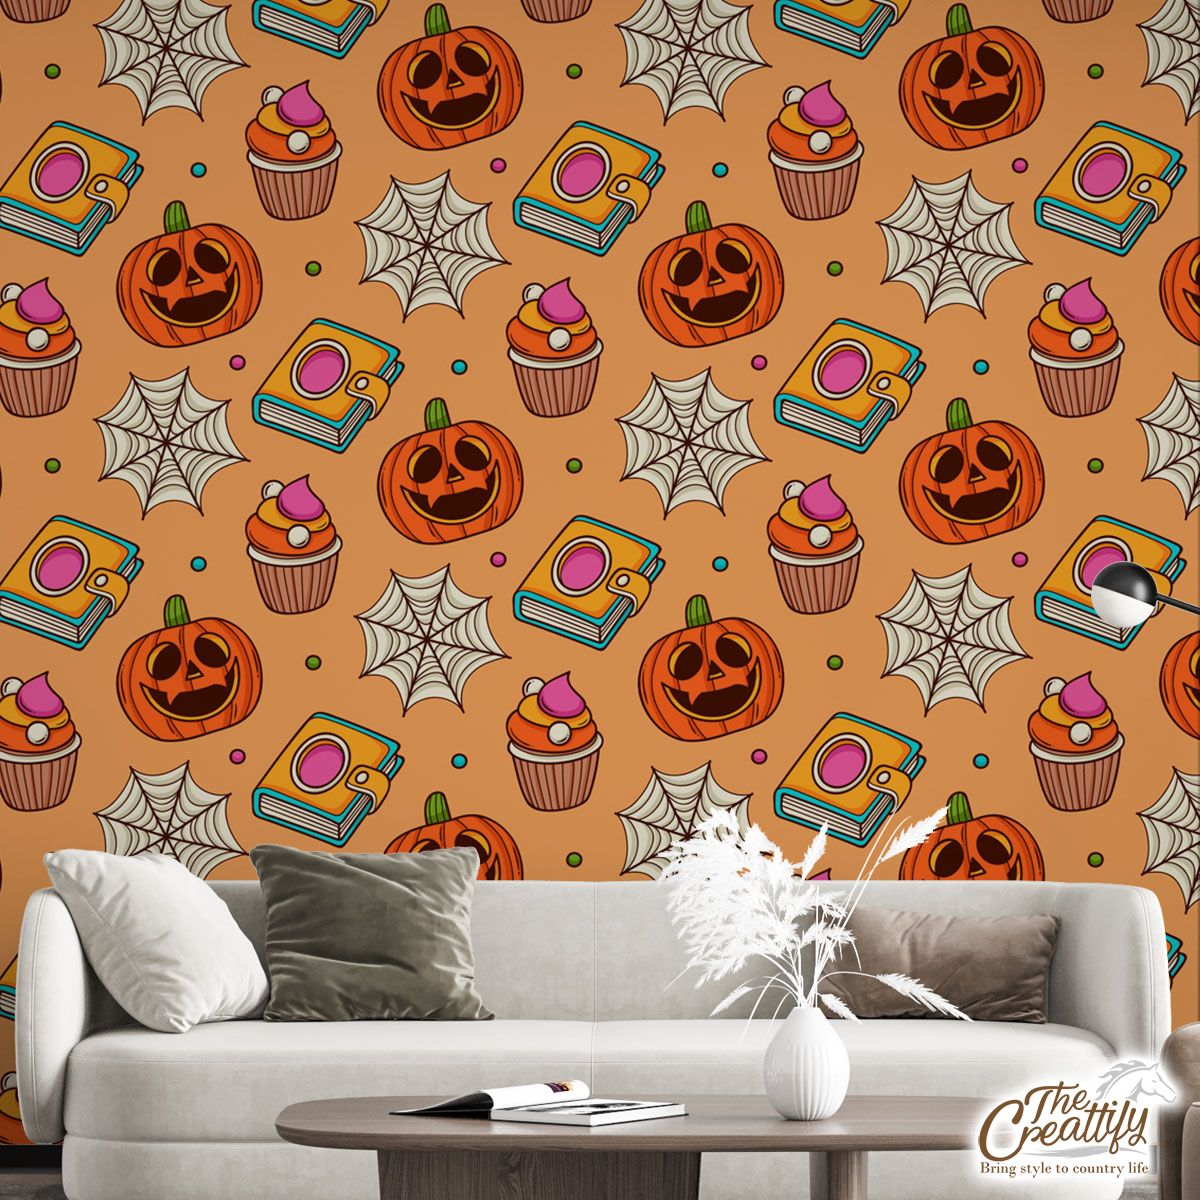 Happy Halloween With Pumpkin, Spider Web And Cartoon Cupcake Wall Mural